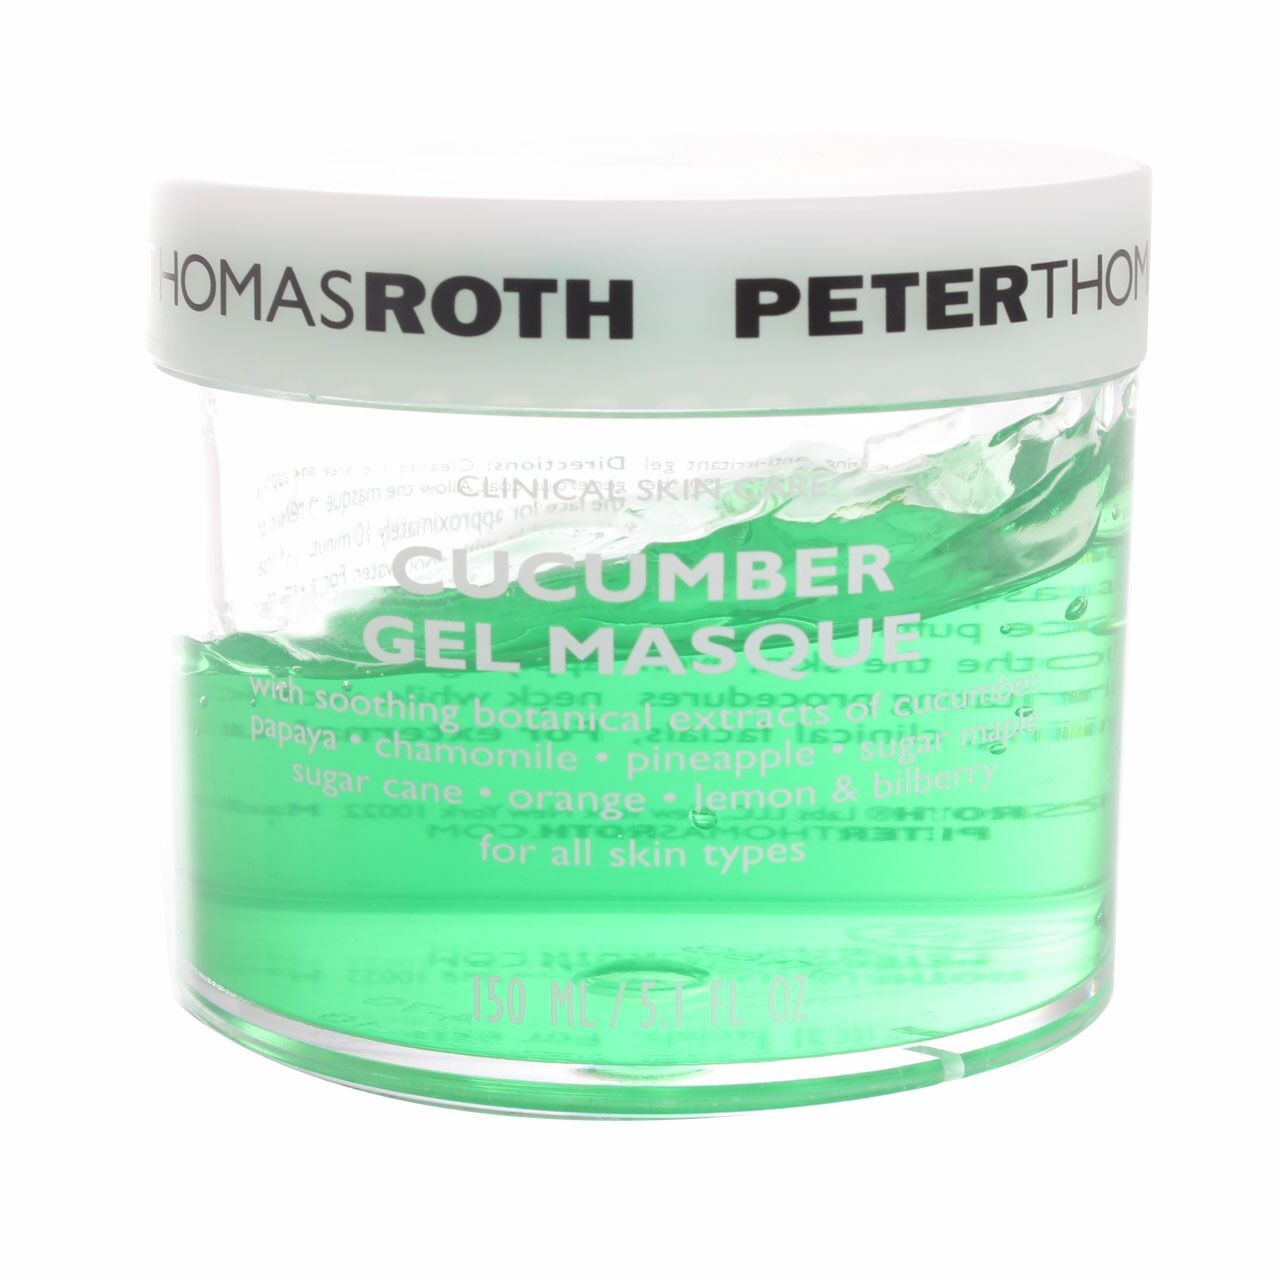 Peter Thomas Roth Cucumber Gel Masque Skin Care